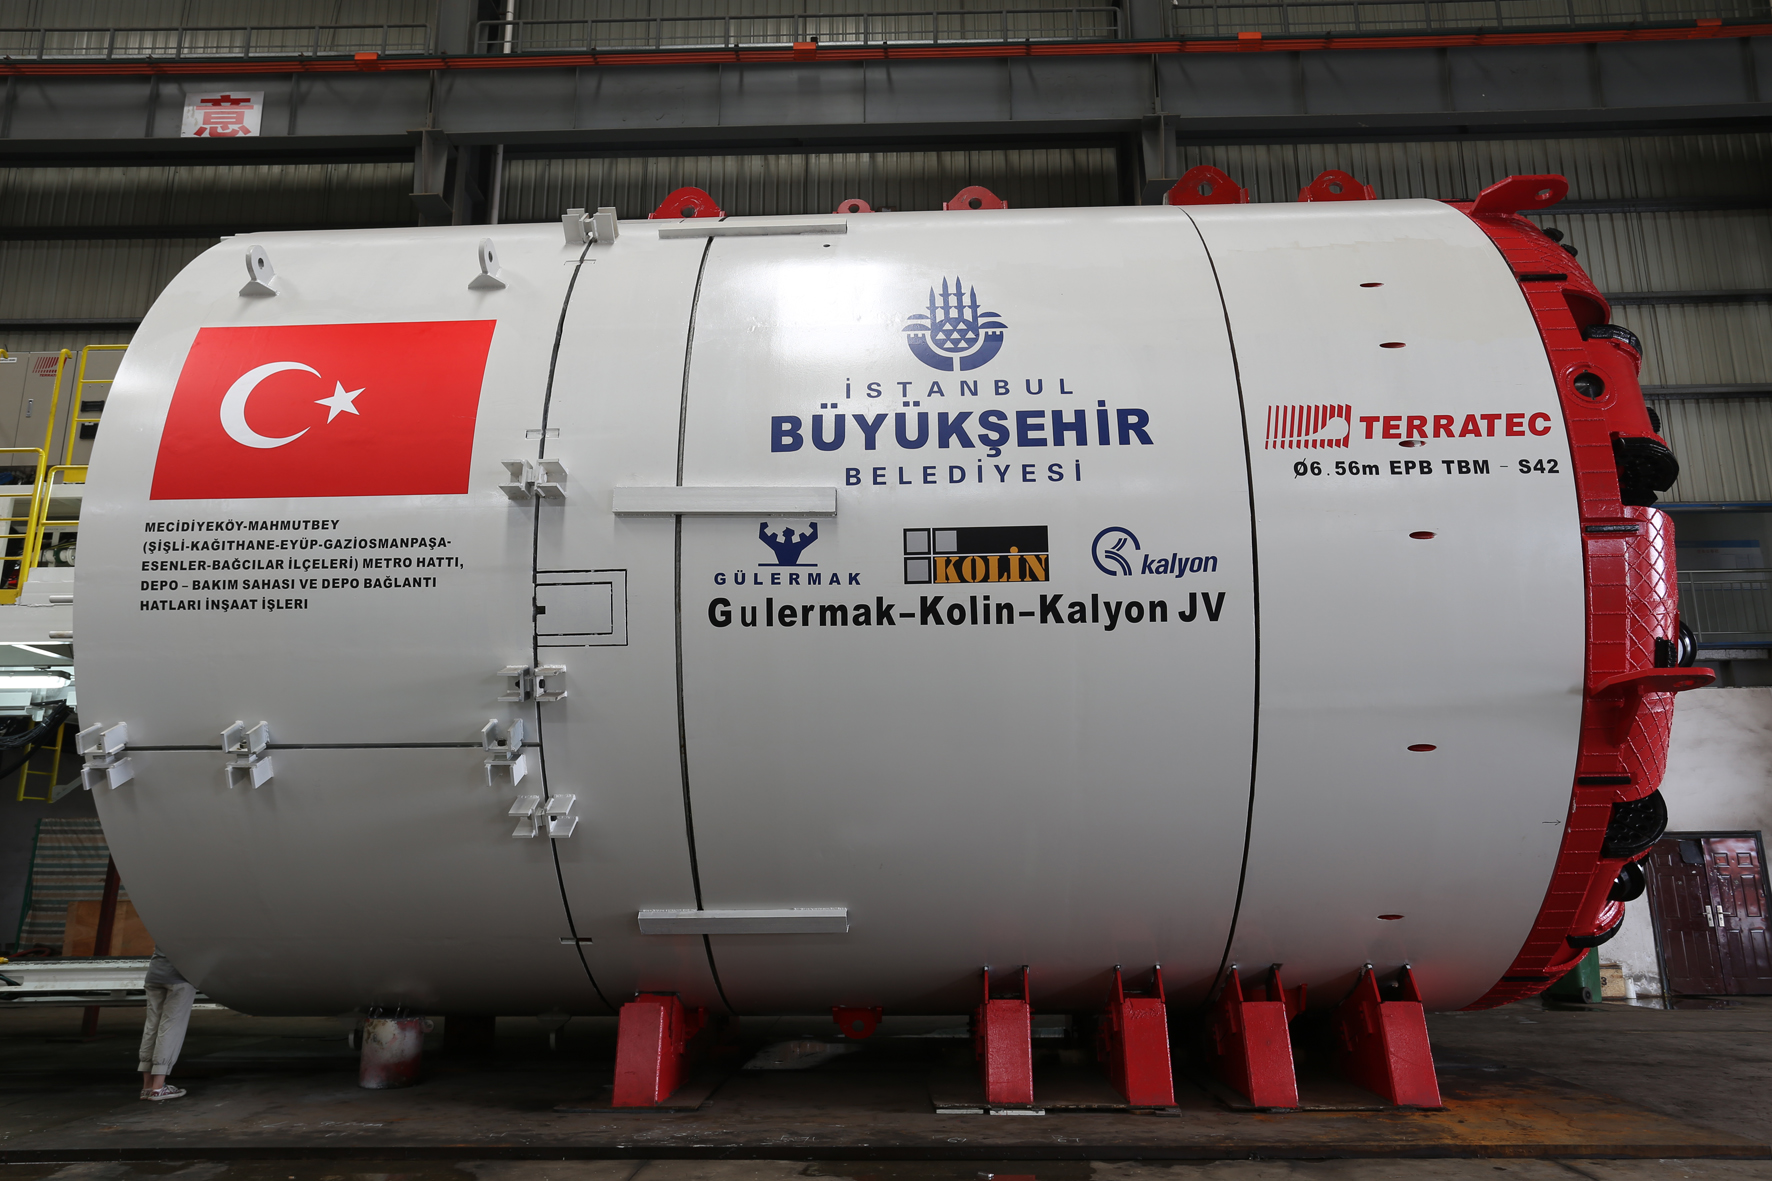 Tunnel Boring Machine for Istanbul Metro